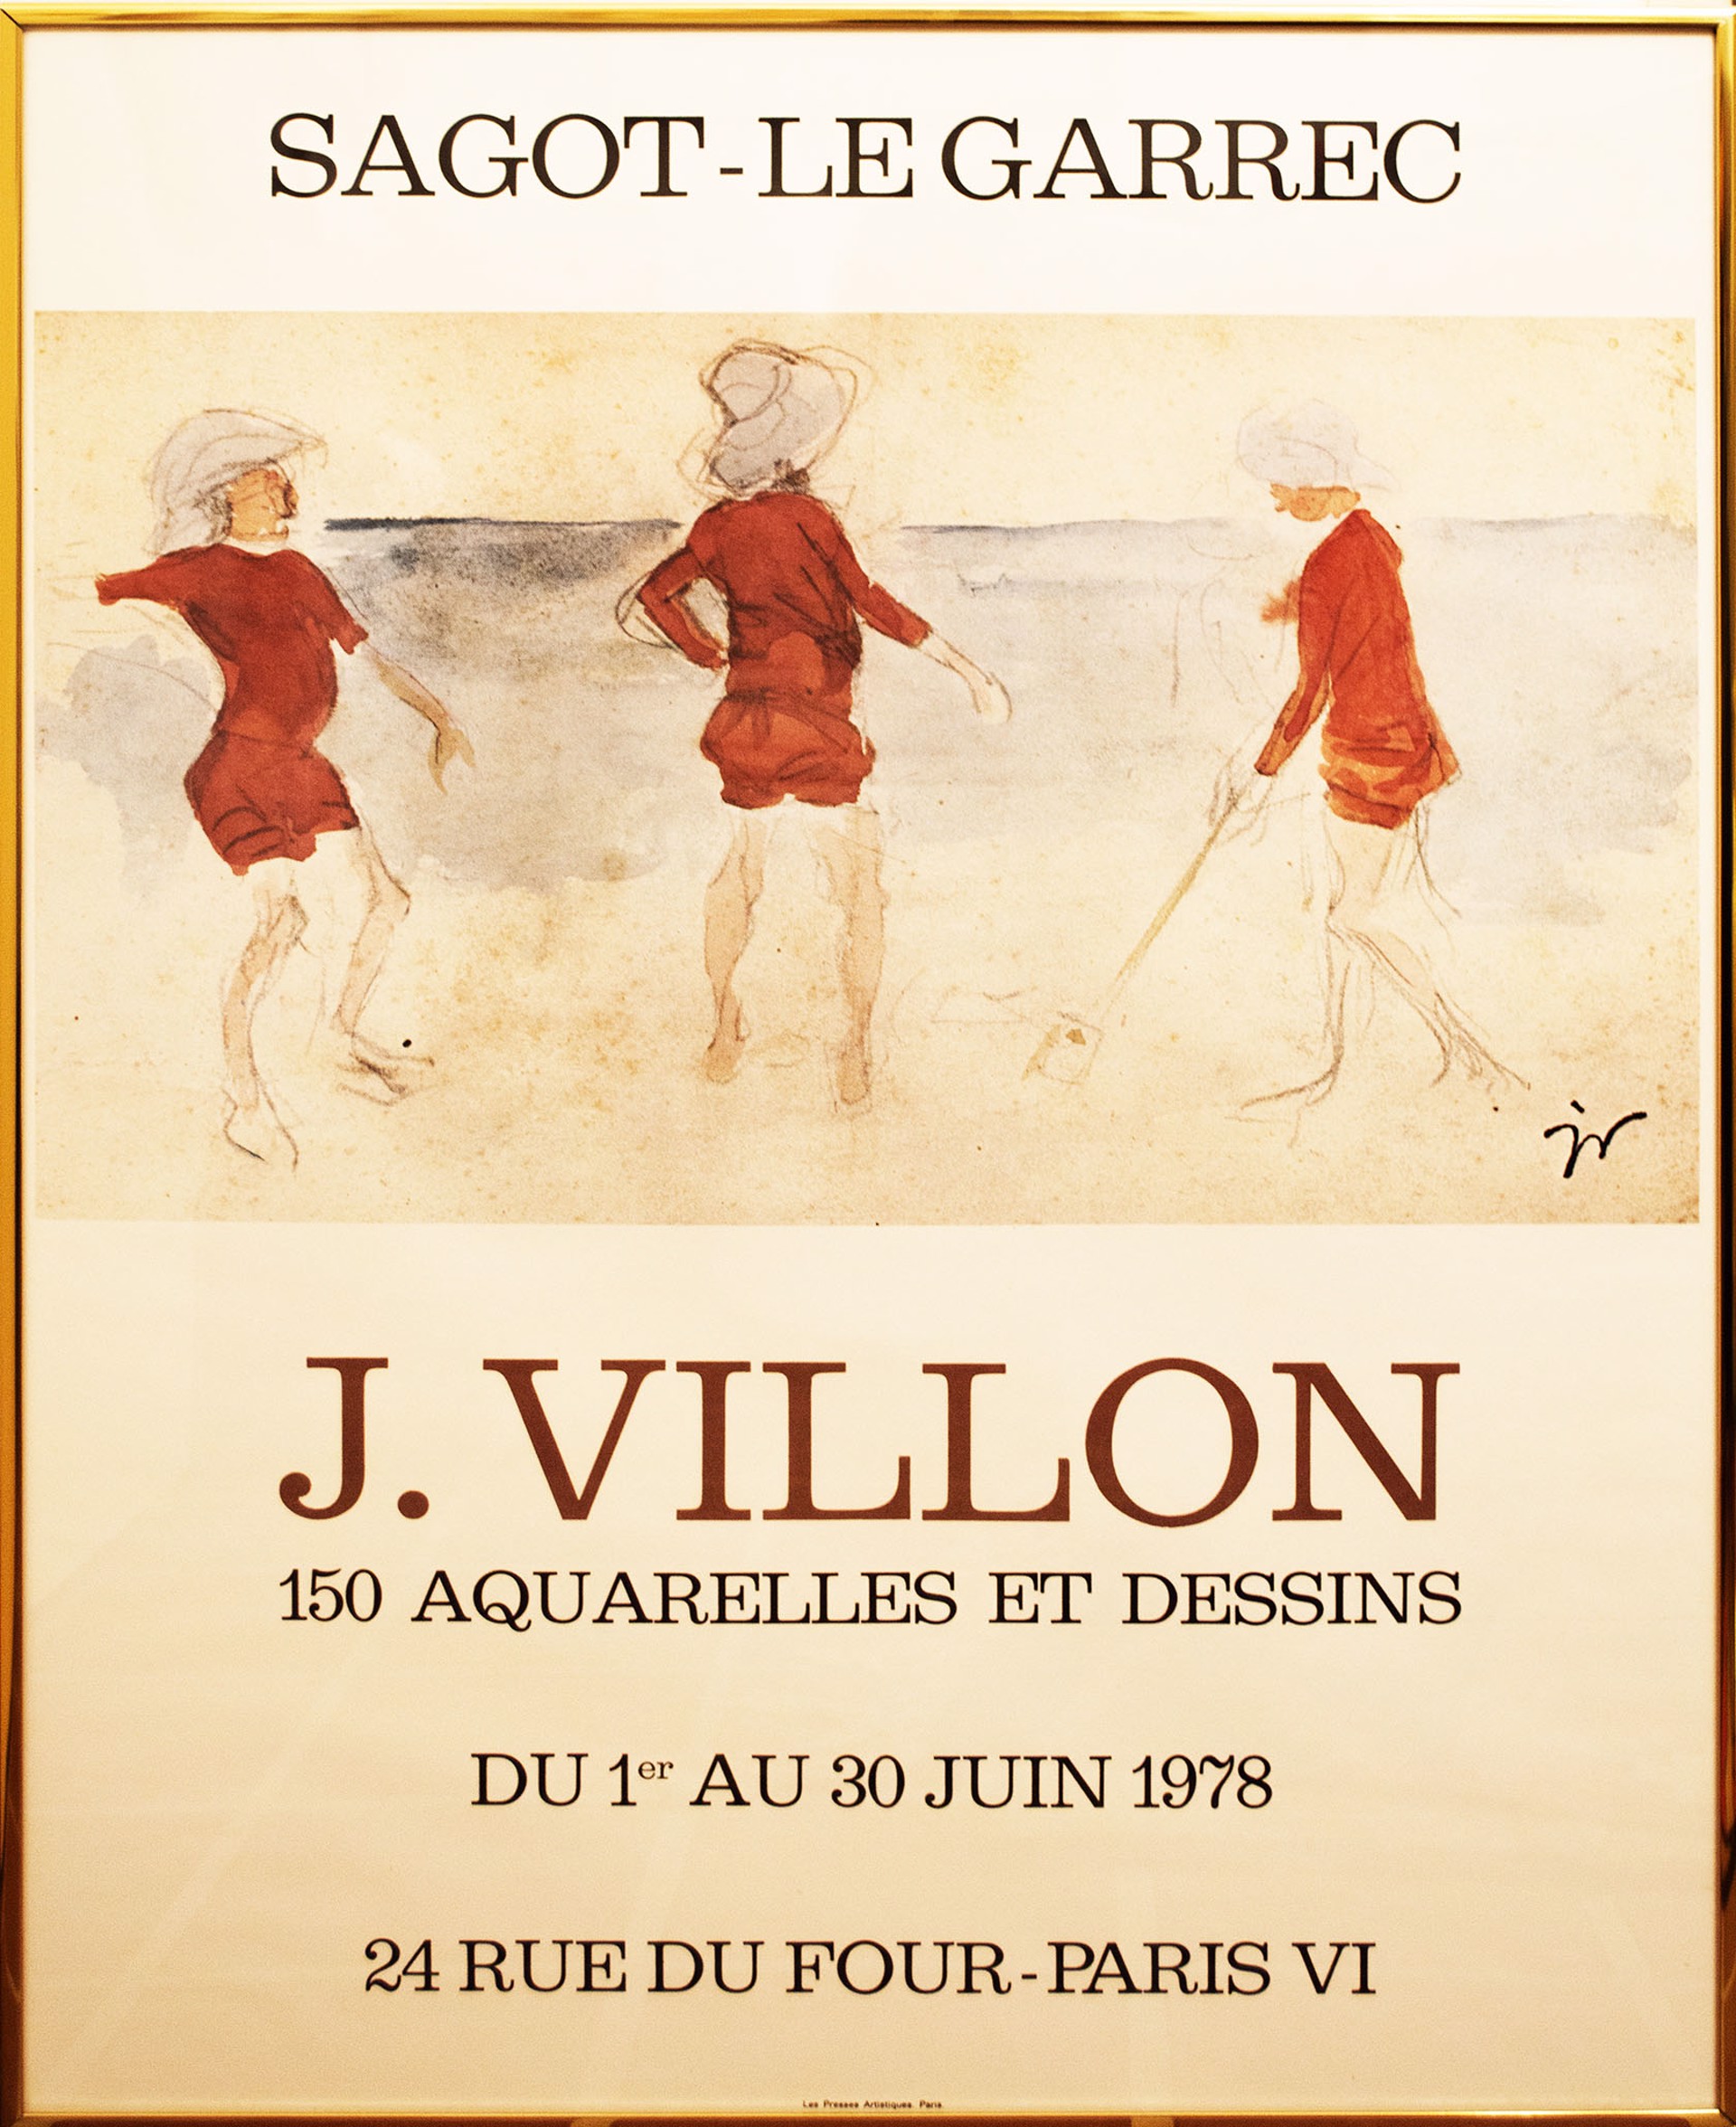 Sagot-Le Garrec by Jacques Villon